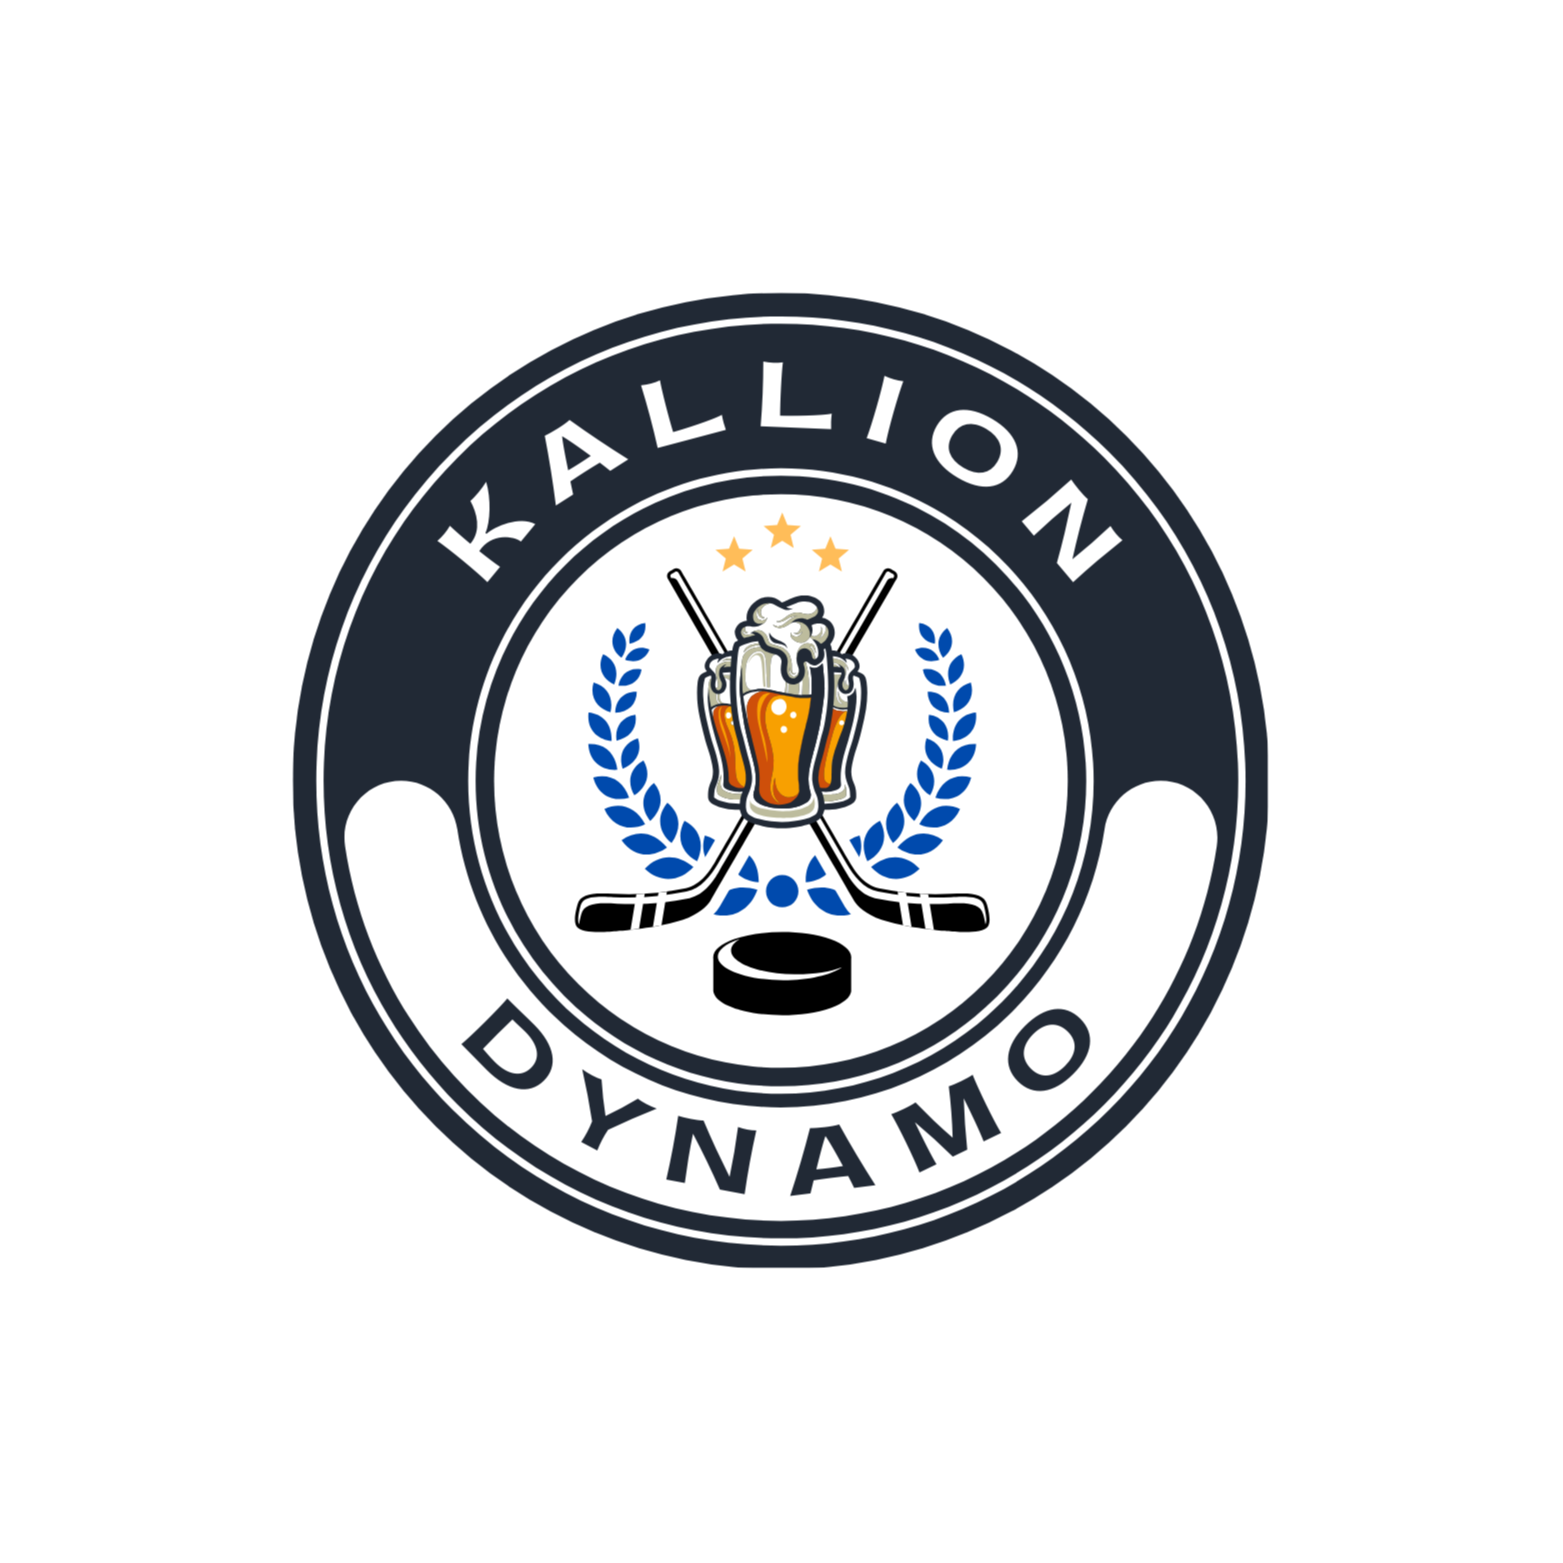 Kallion Dynamo